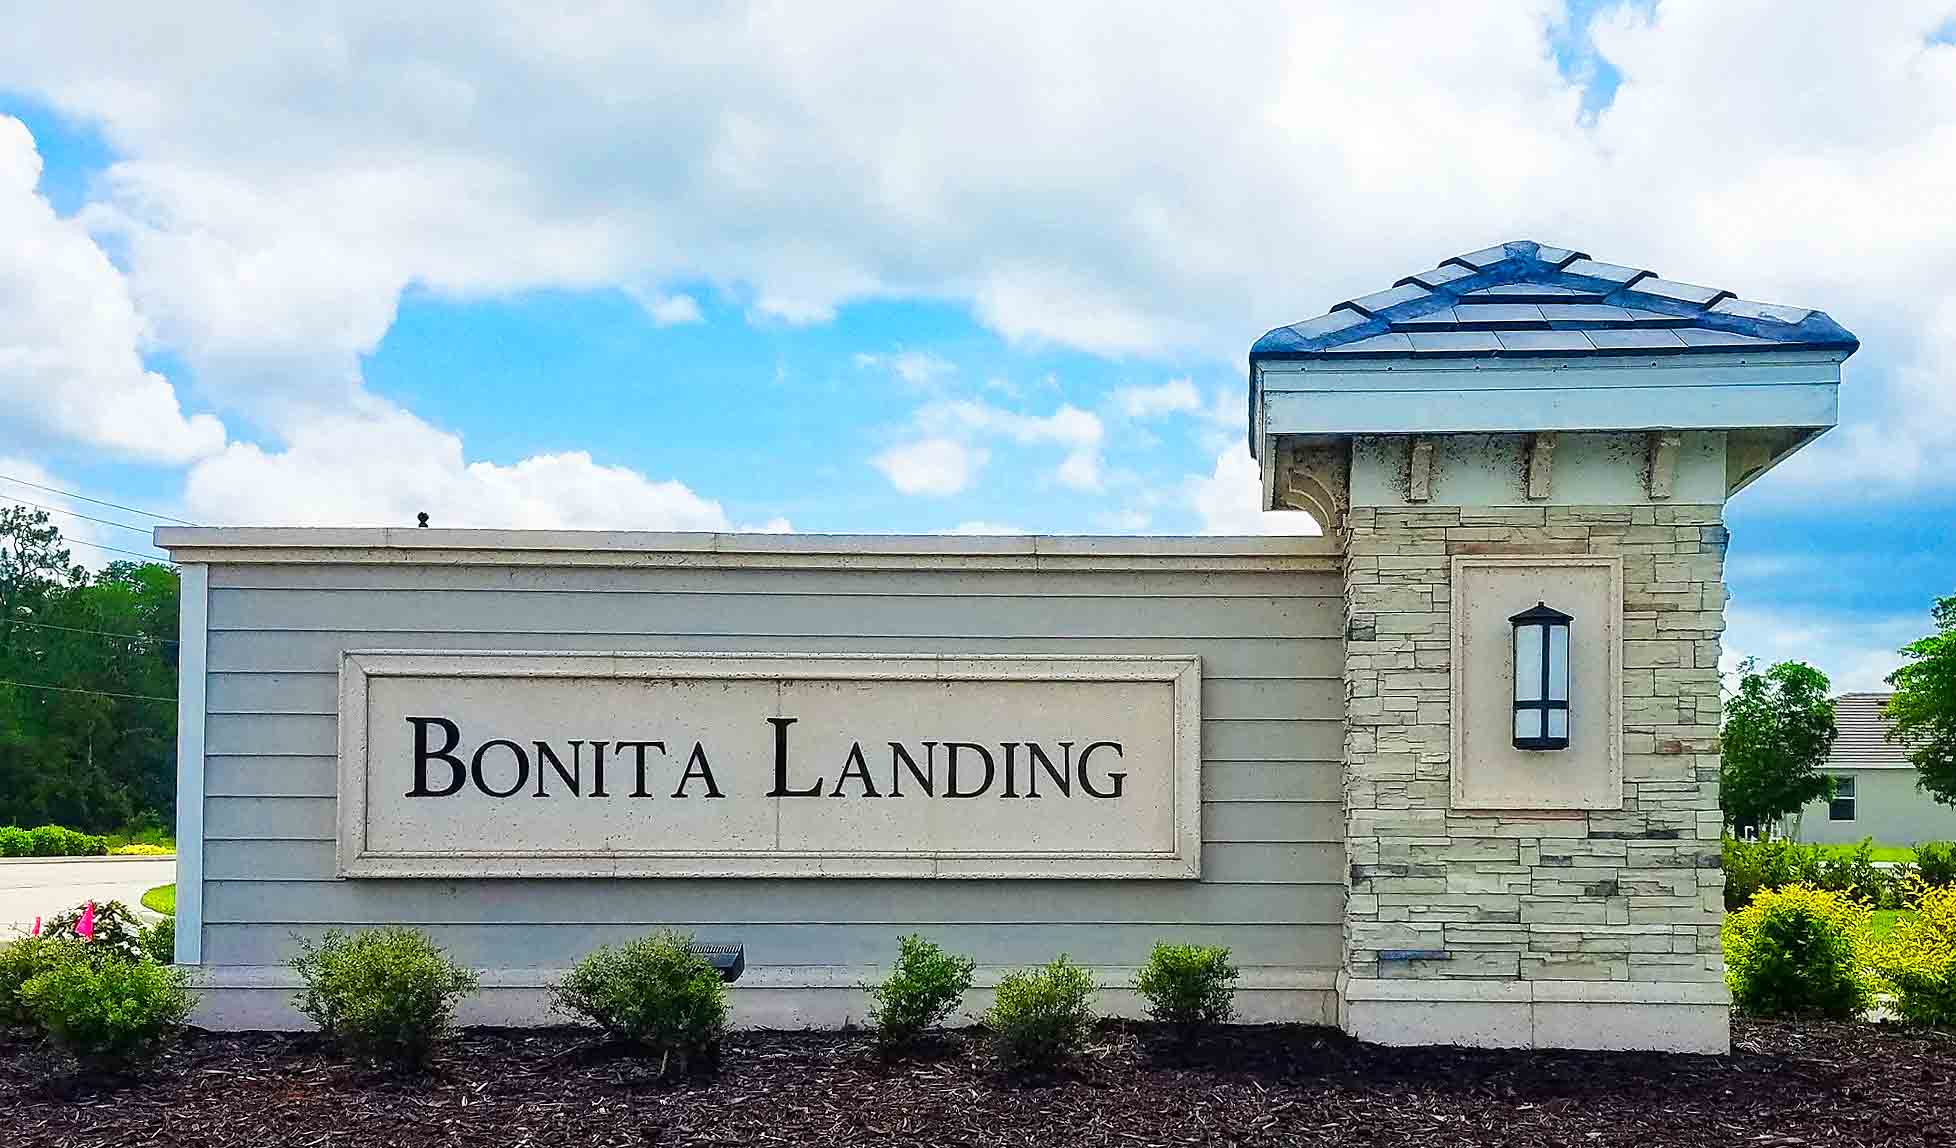 New Community of Bonita Landing